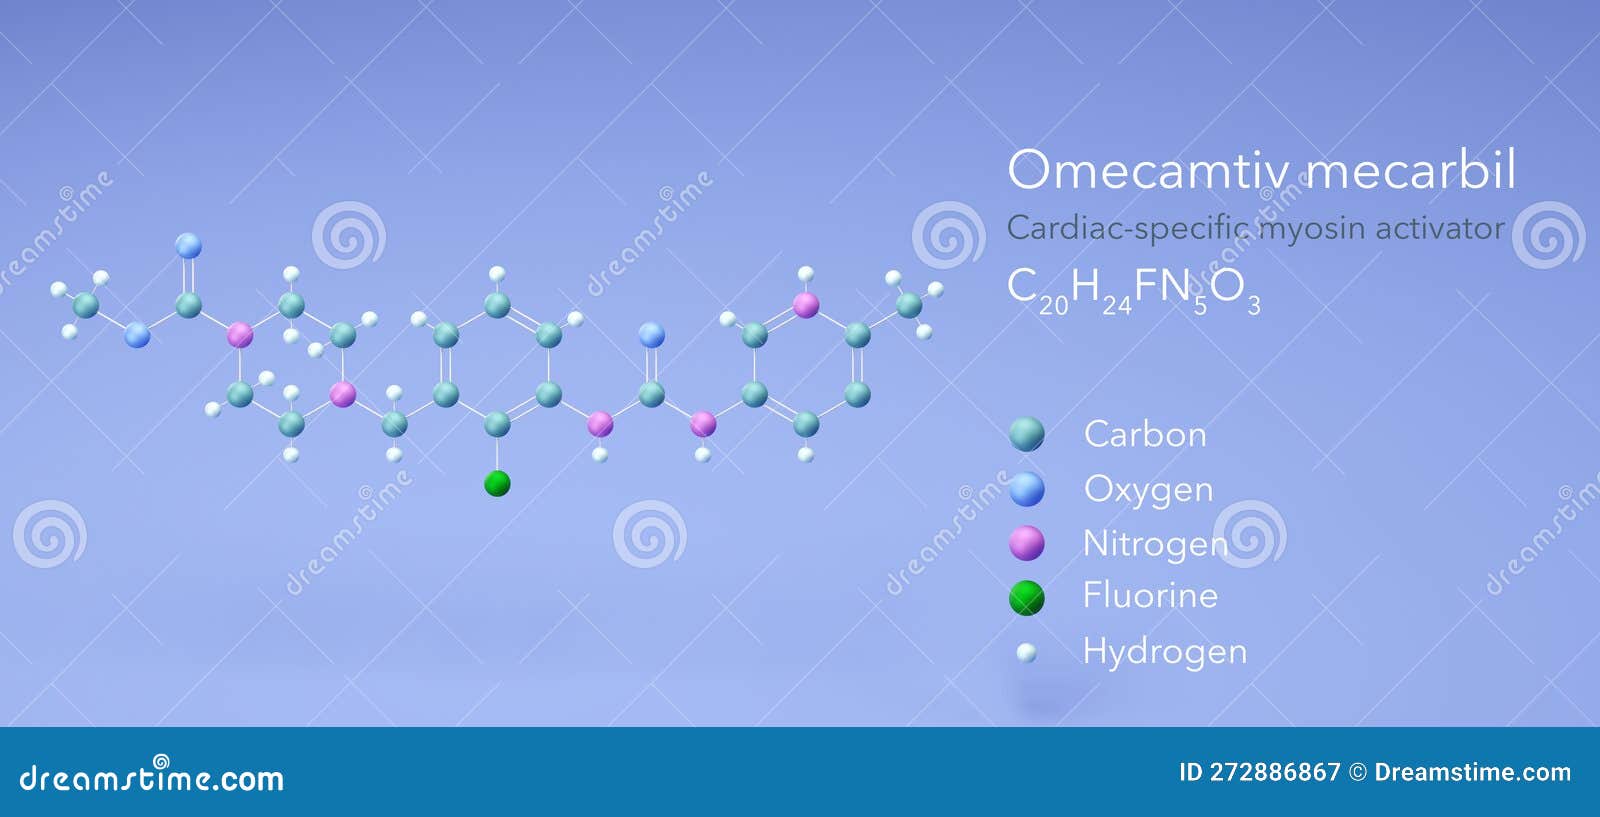 omecamtiv mecarbil molecule, molecular structures, cardiac-specific myosin activator, 3d model, structural chemical formula and